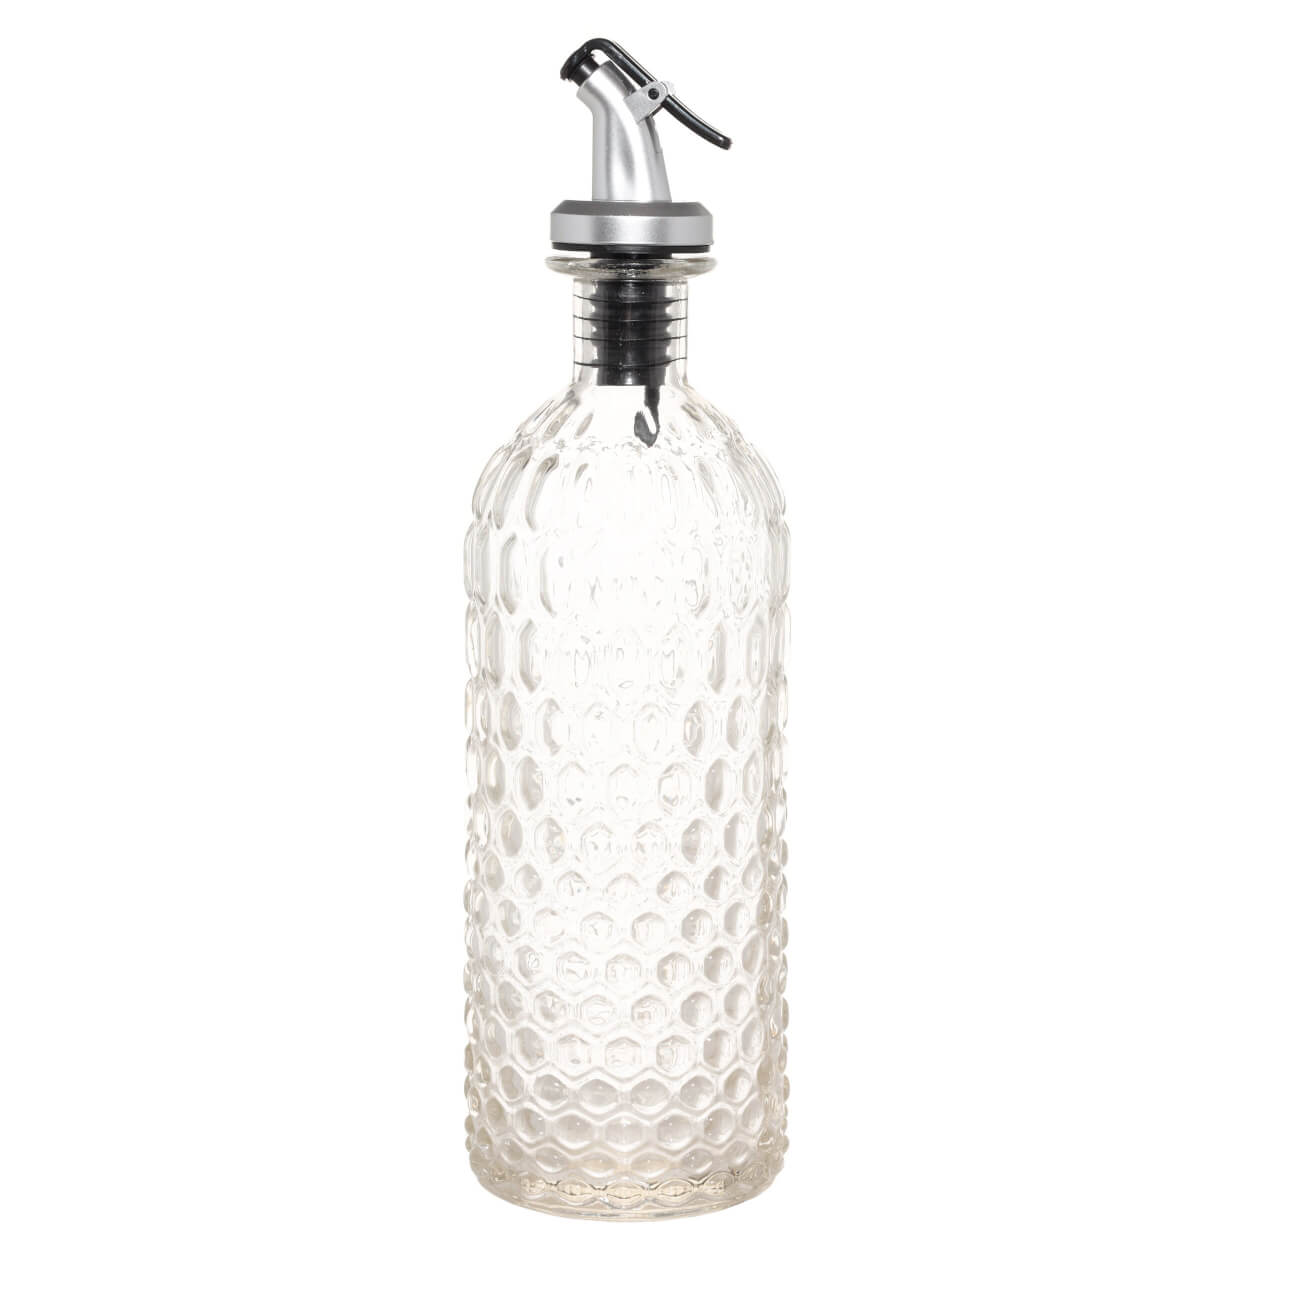 Бутылка для масла или уксуса, 450 мл, с дозатором, стекло Р/пластик, Bubbly бутылка спрей для масла bradex